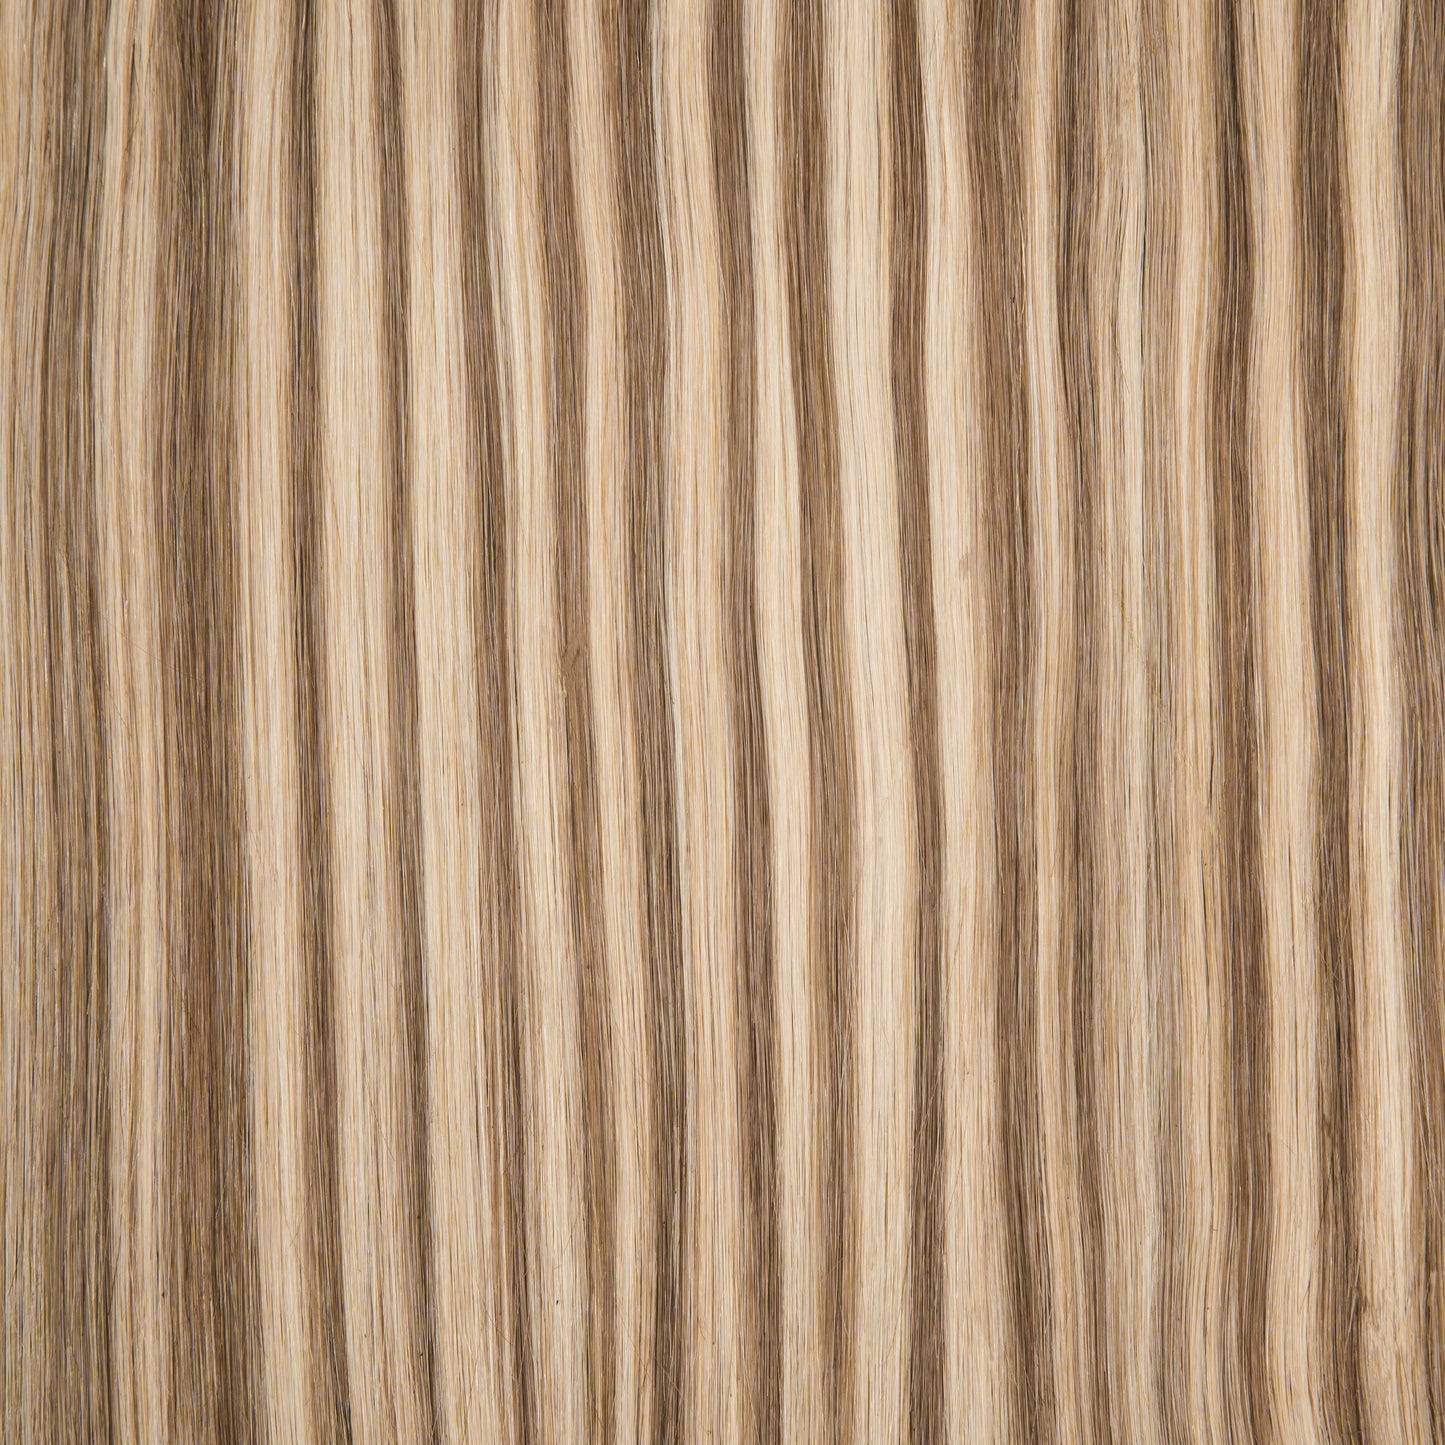 16" Volume Hair Extensions Creamy Beige Blonde